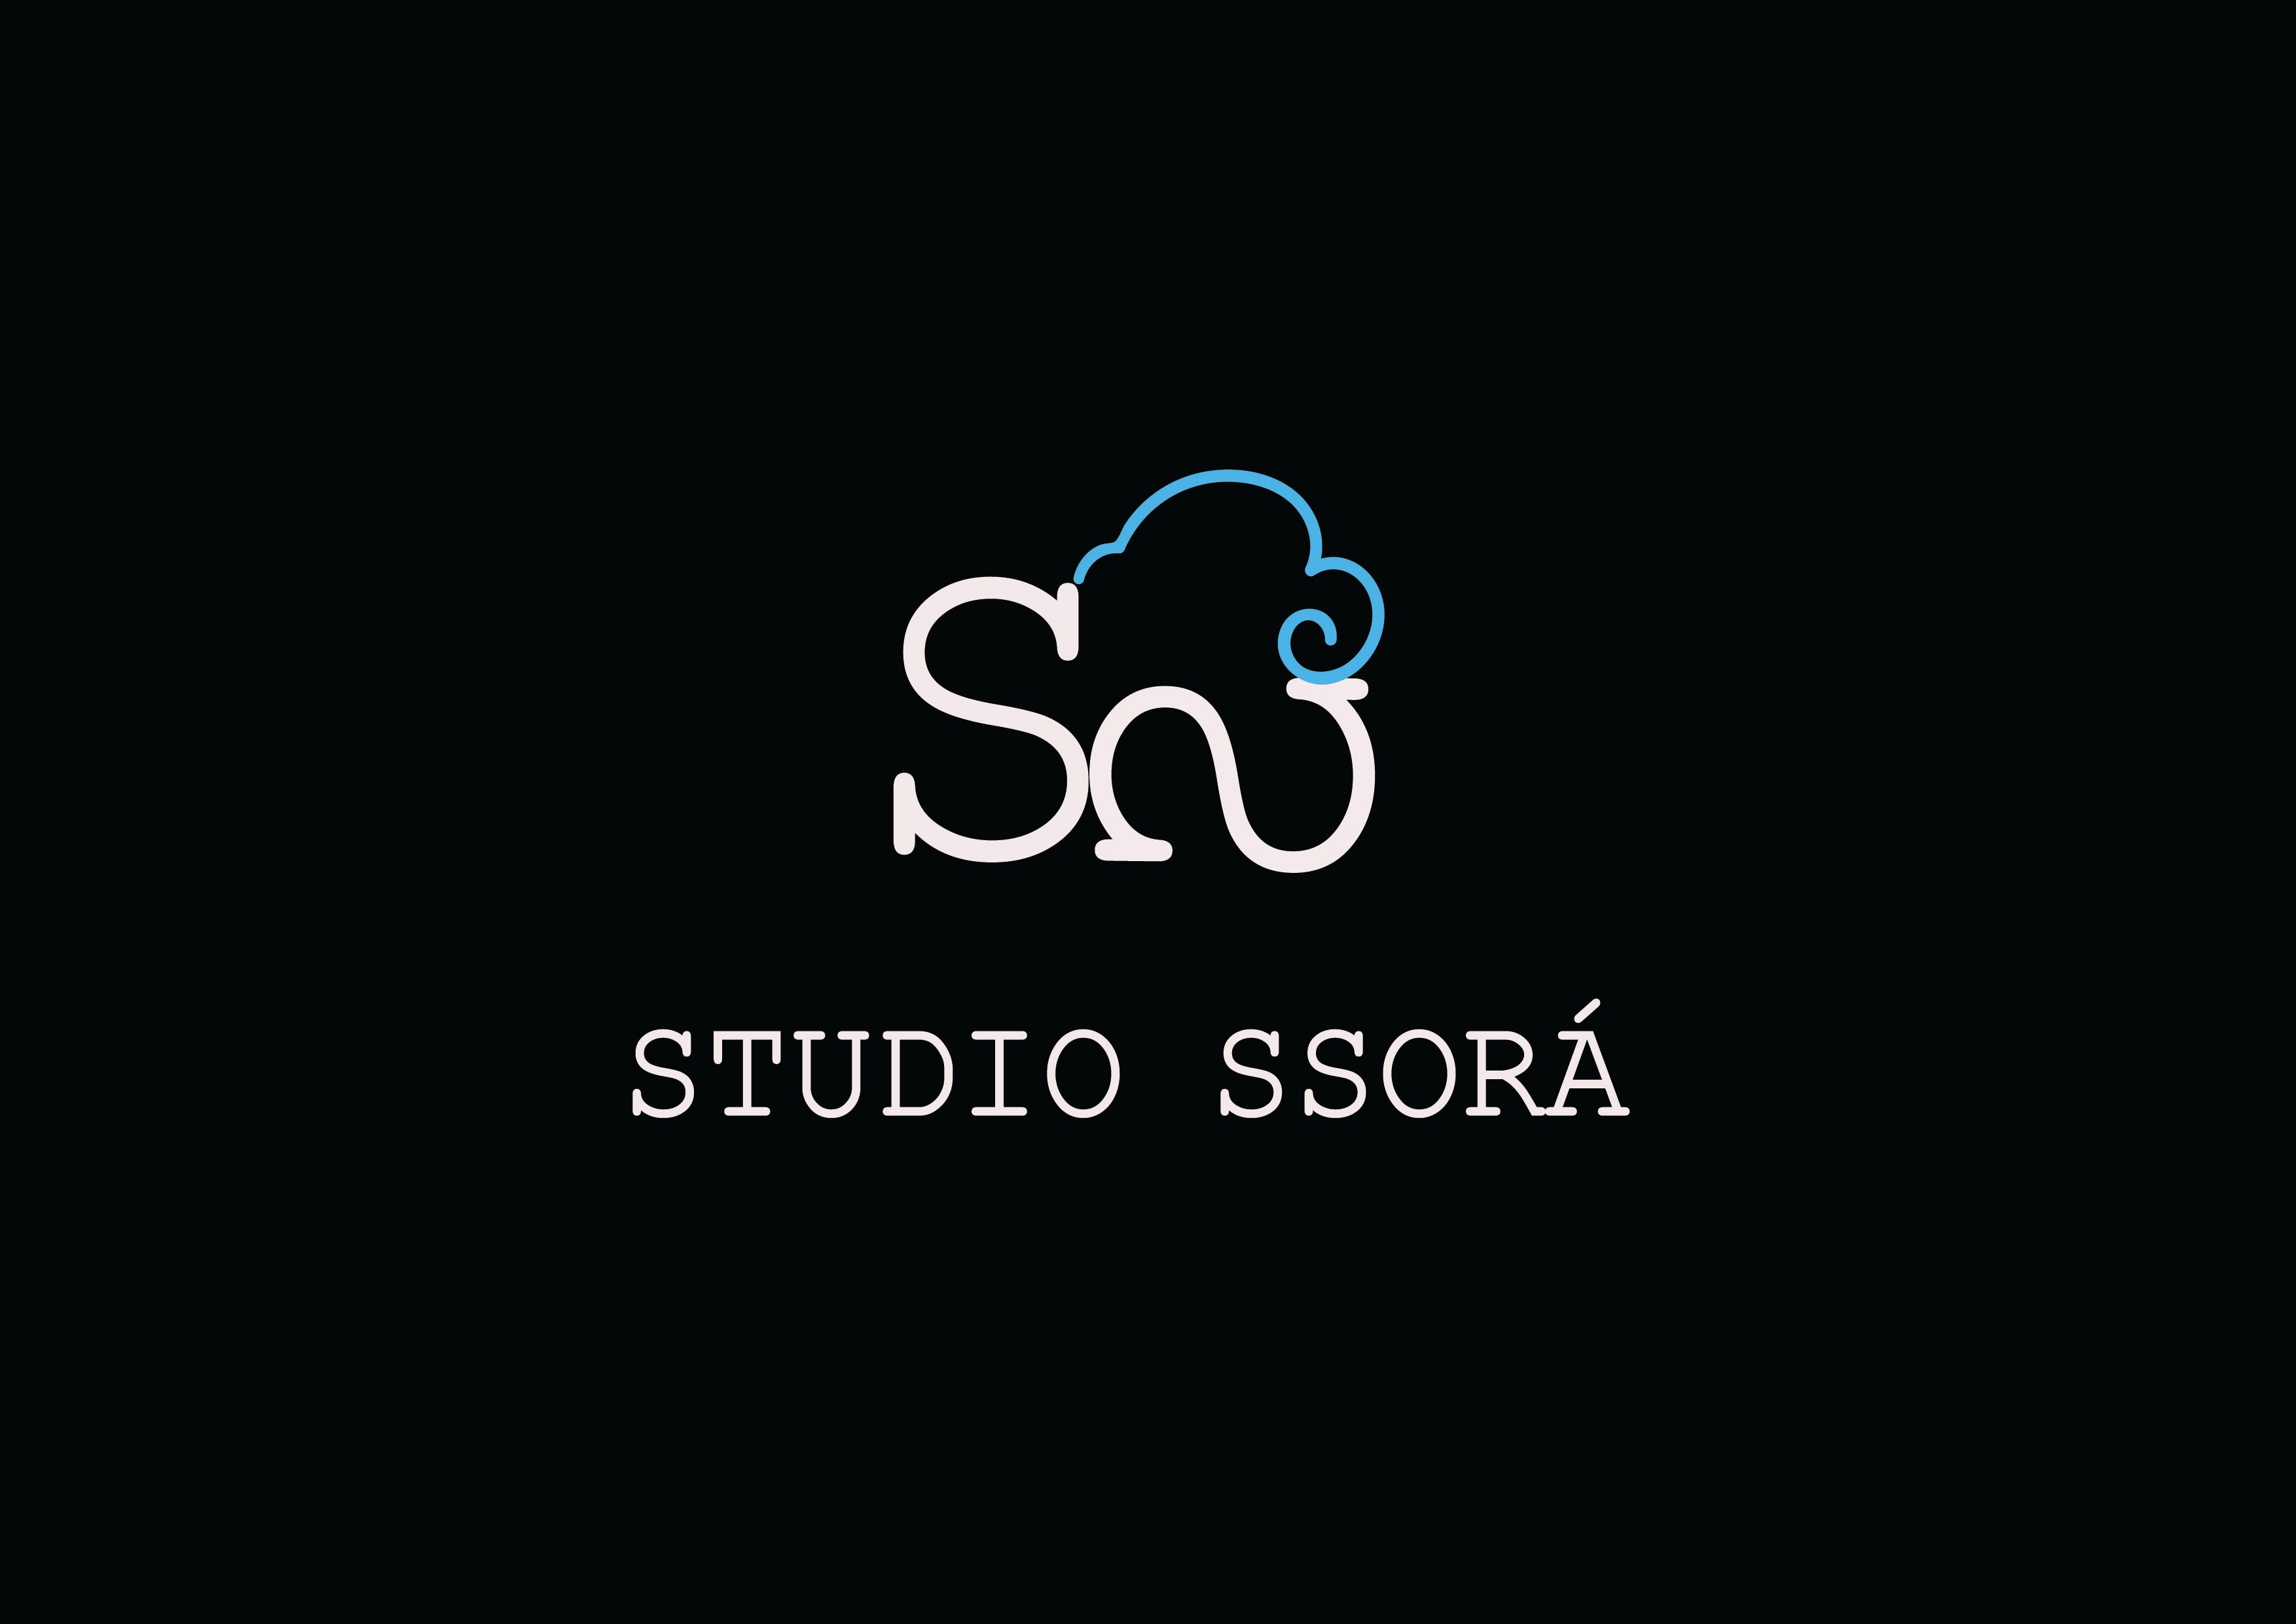 www.studiossora.com